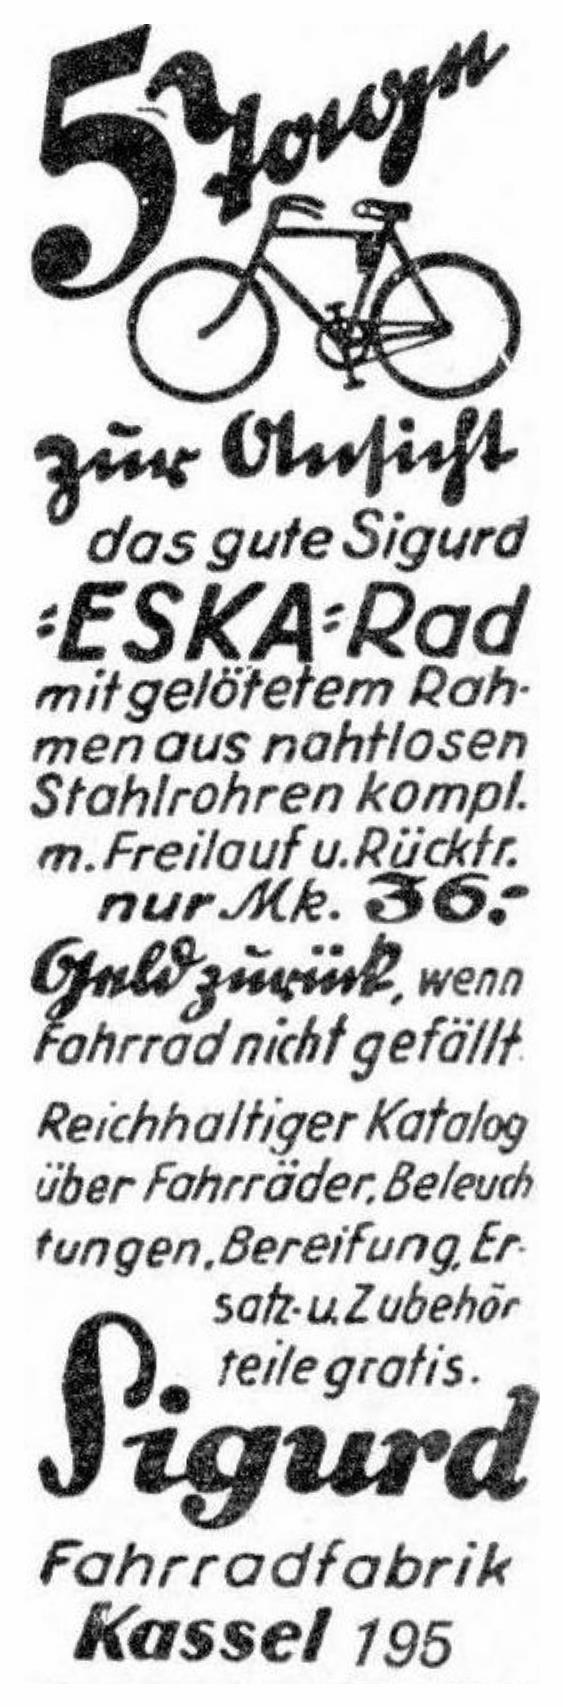 ESKA Rad 1934.jpg